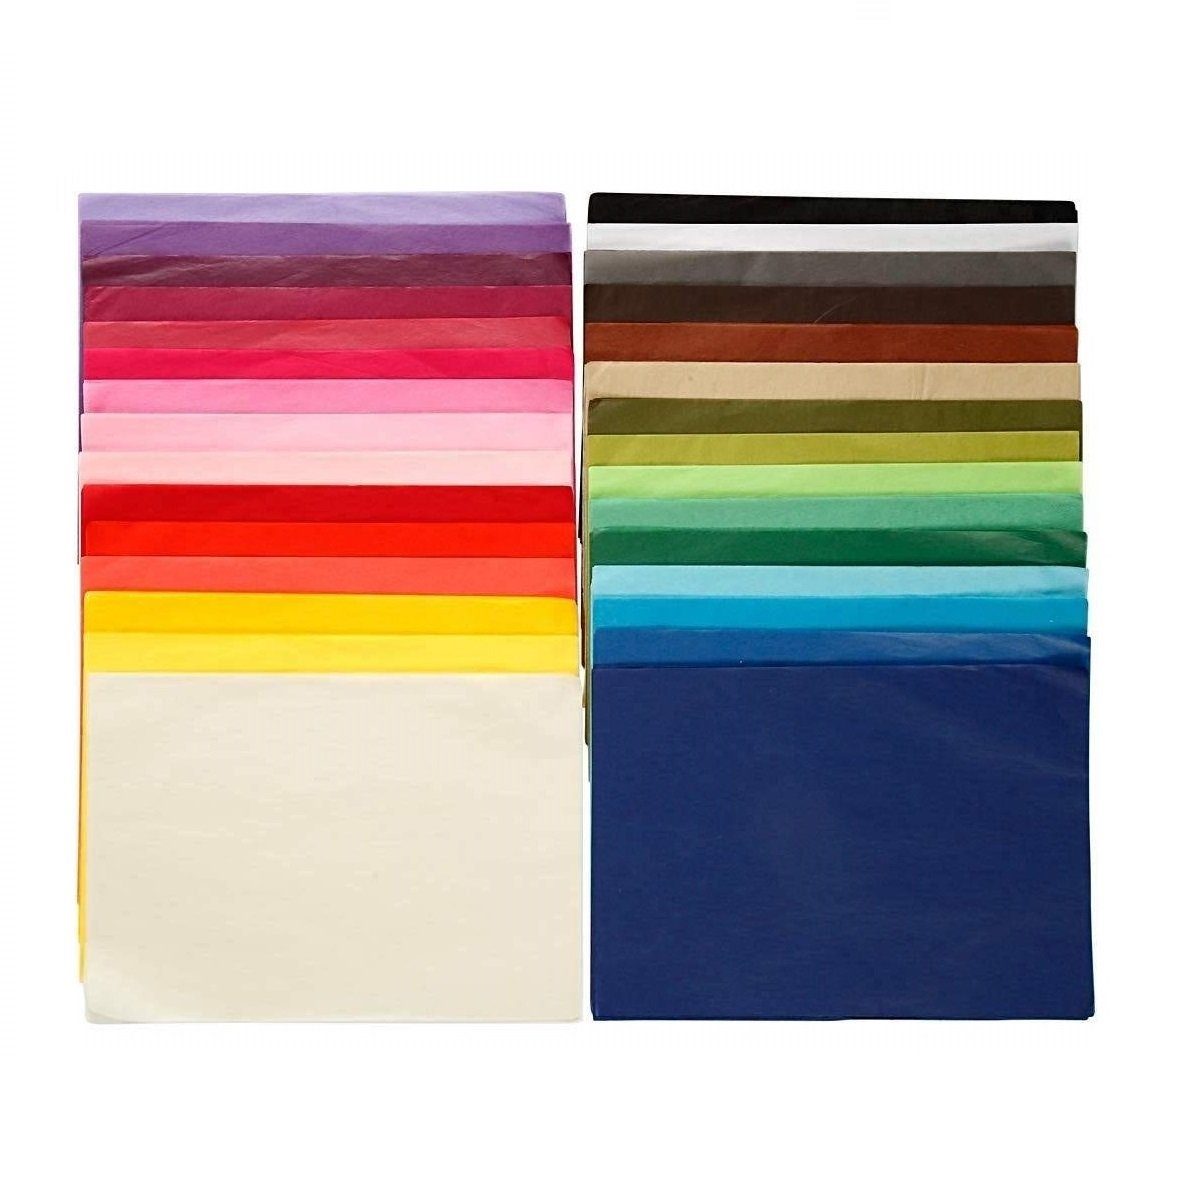 creativ company Seidenpapier Farbe 10 20914, - Farben verschiedenen Pro Blatt Seidenpapier -, 300 mit Transparentes Blatt 30